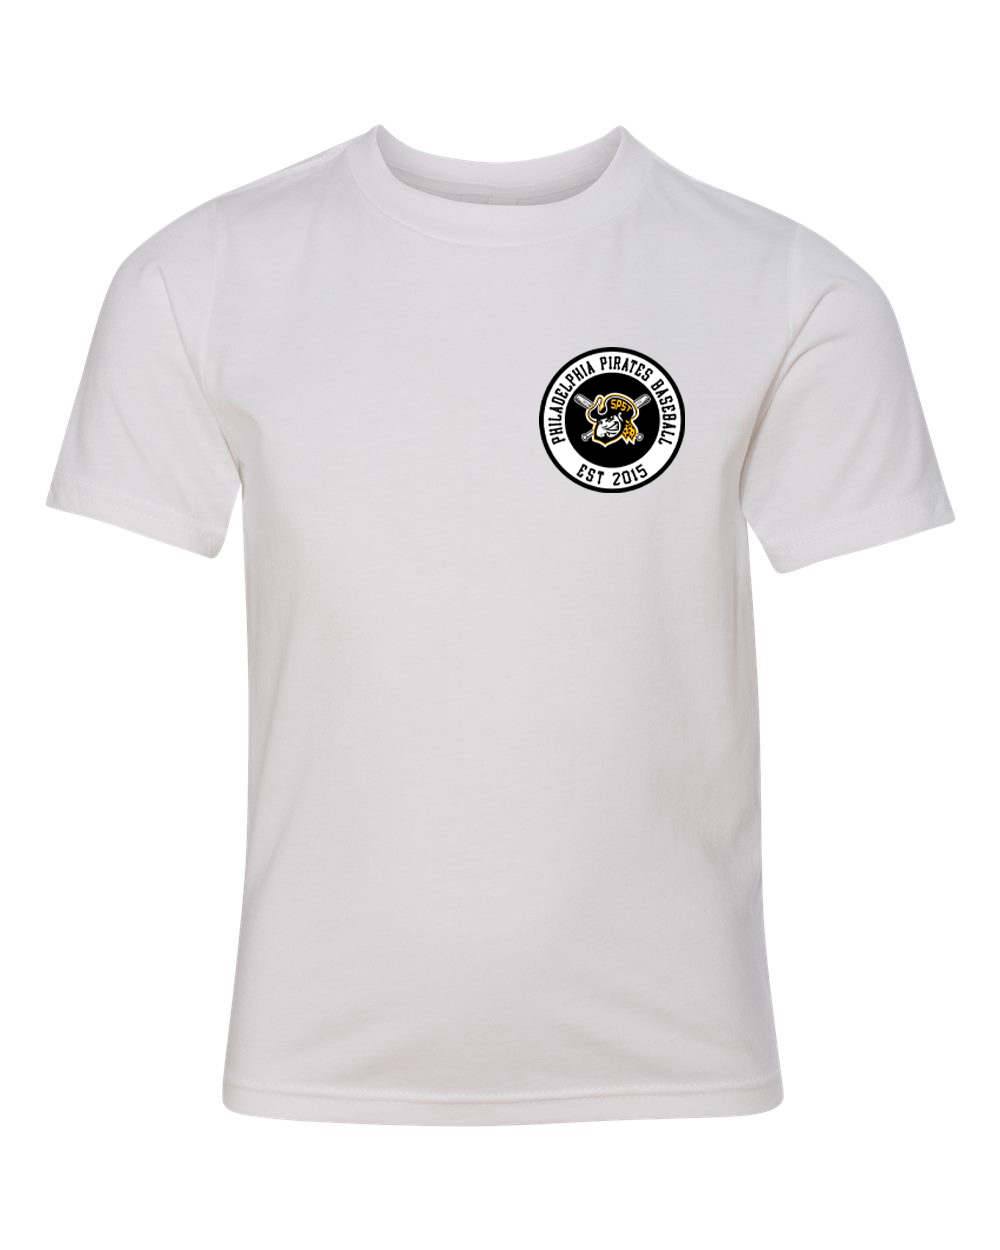 SPST Pirate Youth CVC T-Shirt - 3312